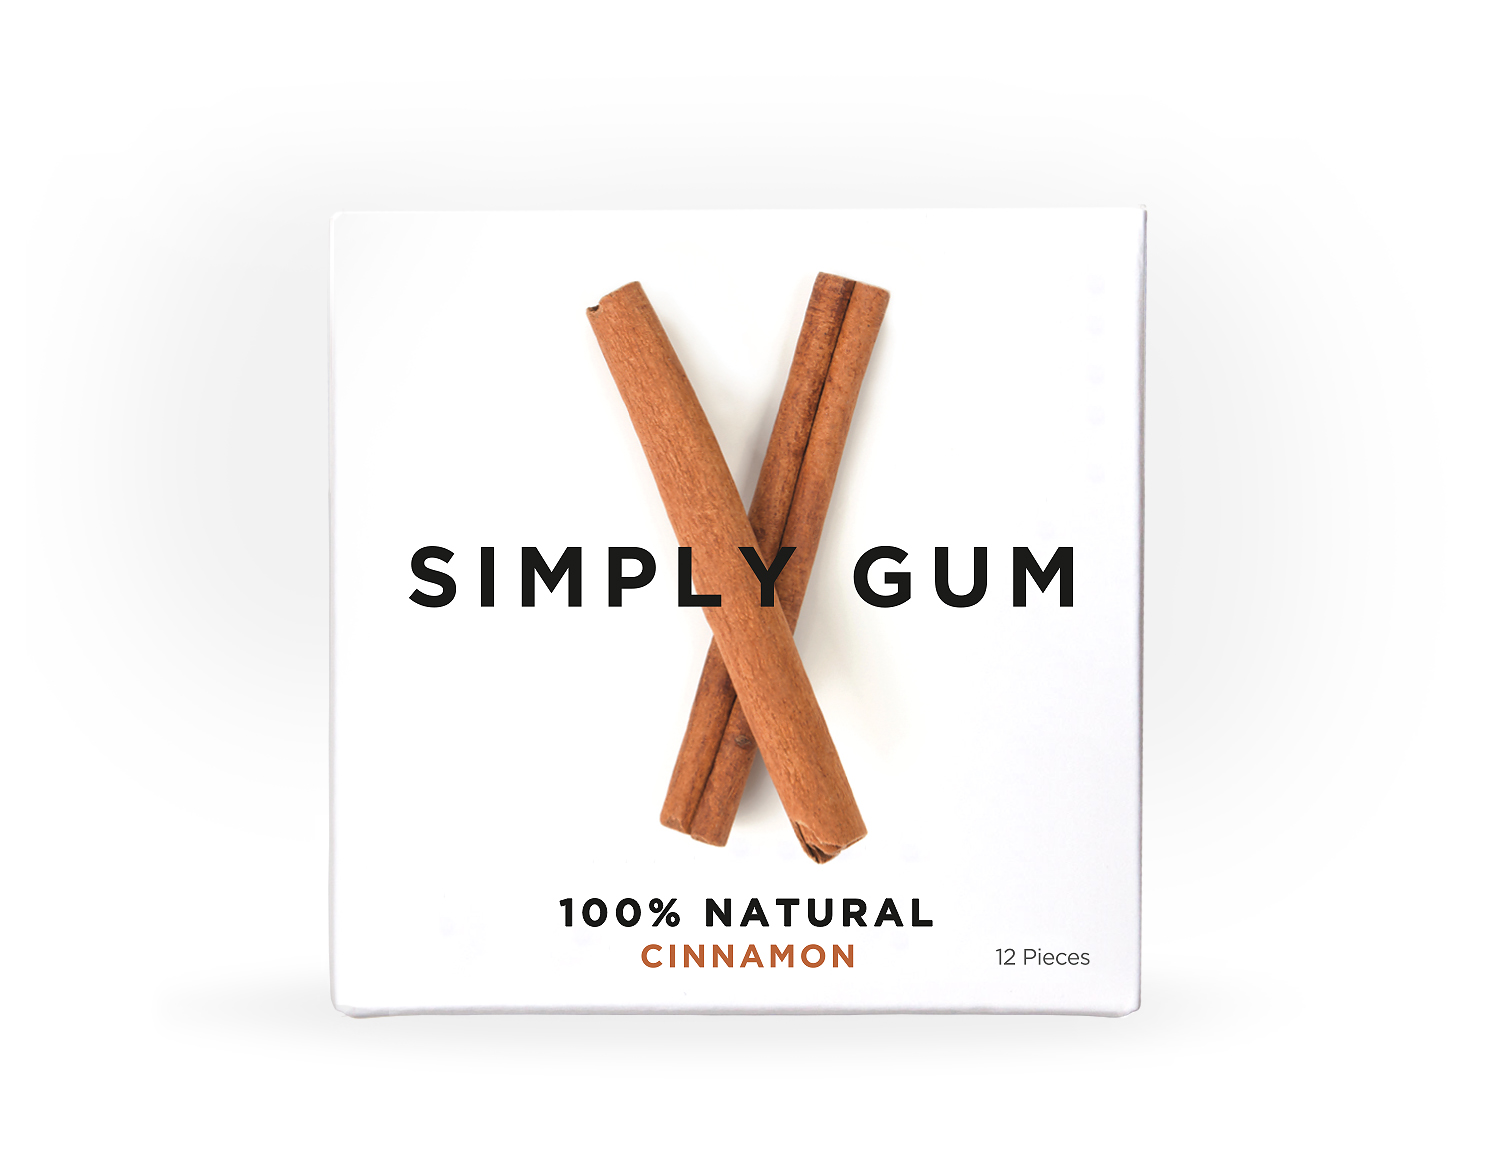 Natural chewing Gum. Simply жевательная резинка. Simply Gum Maple. Gum Cinnamon PNG. Simply gum